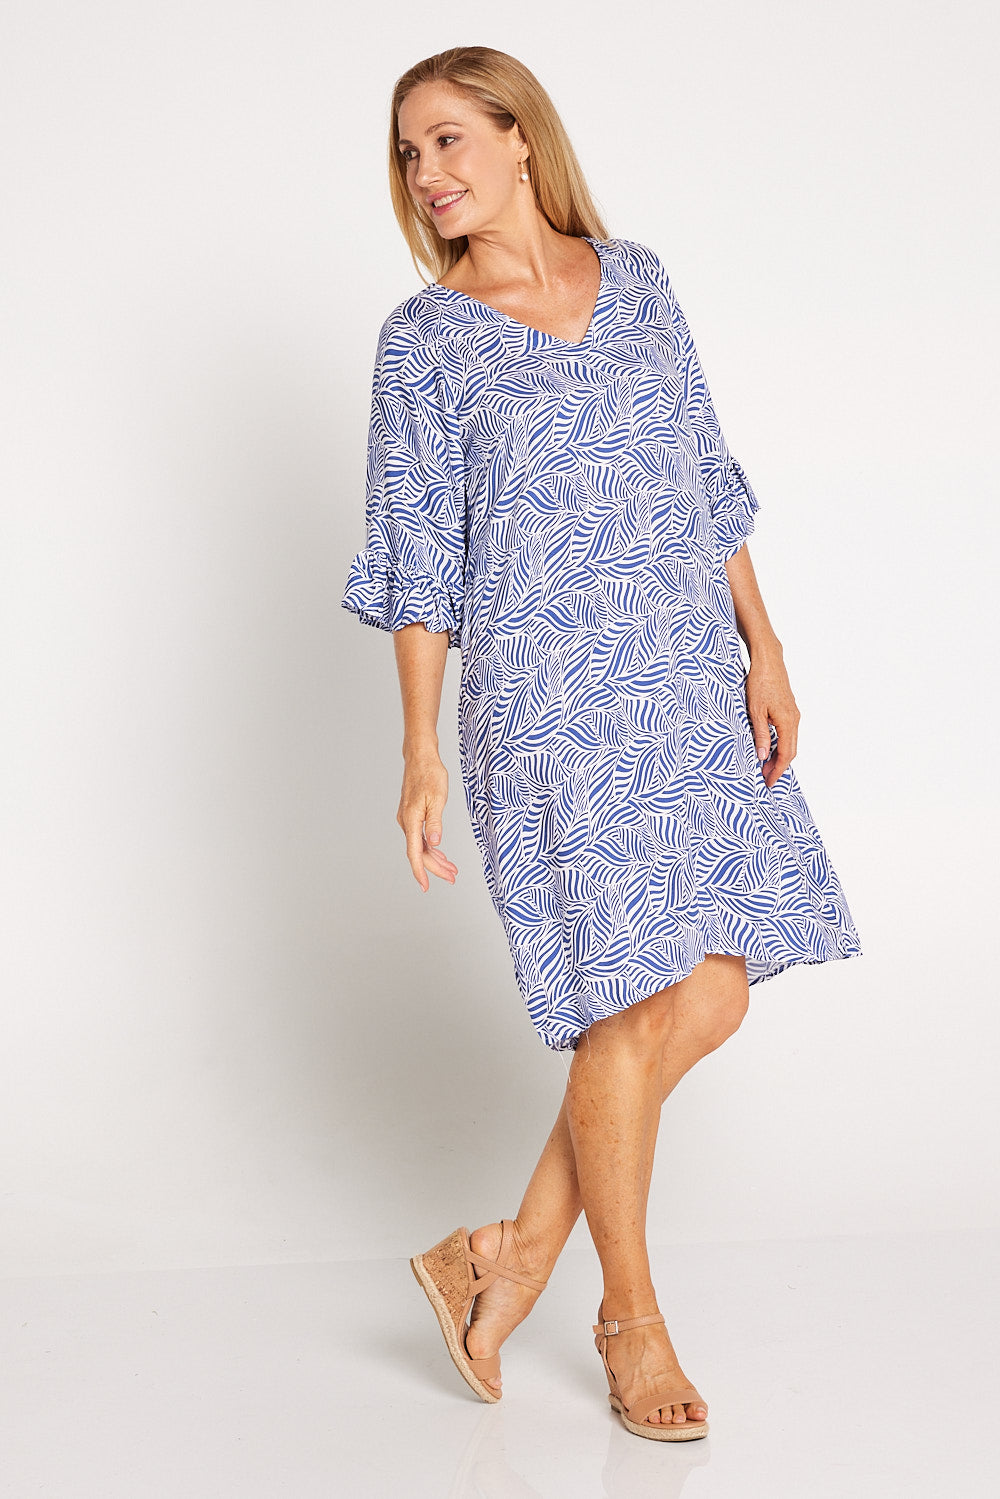 Everette Dress - Blue White Stripe